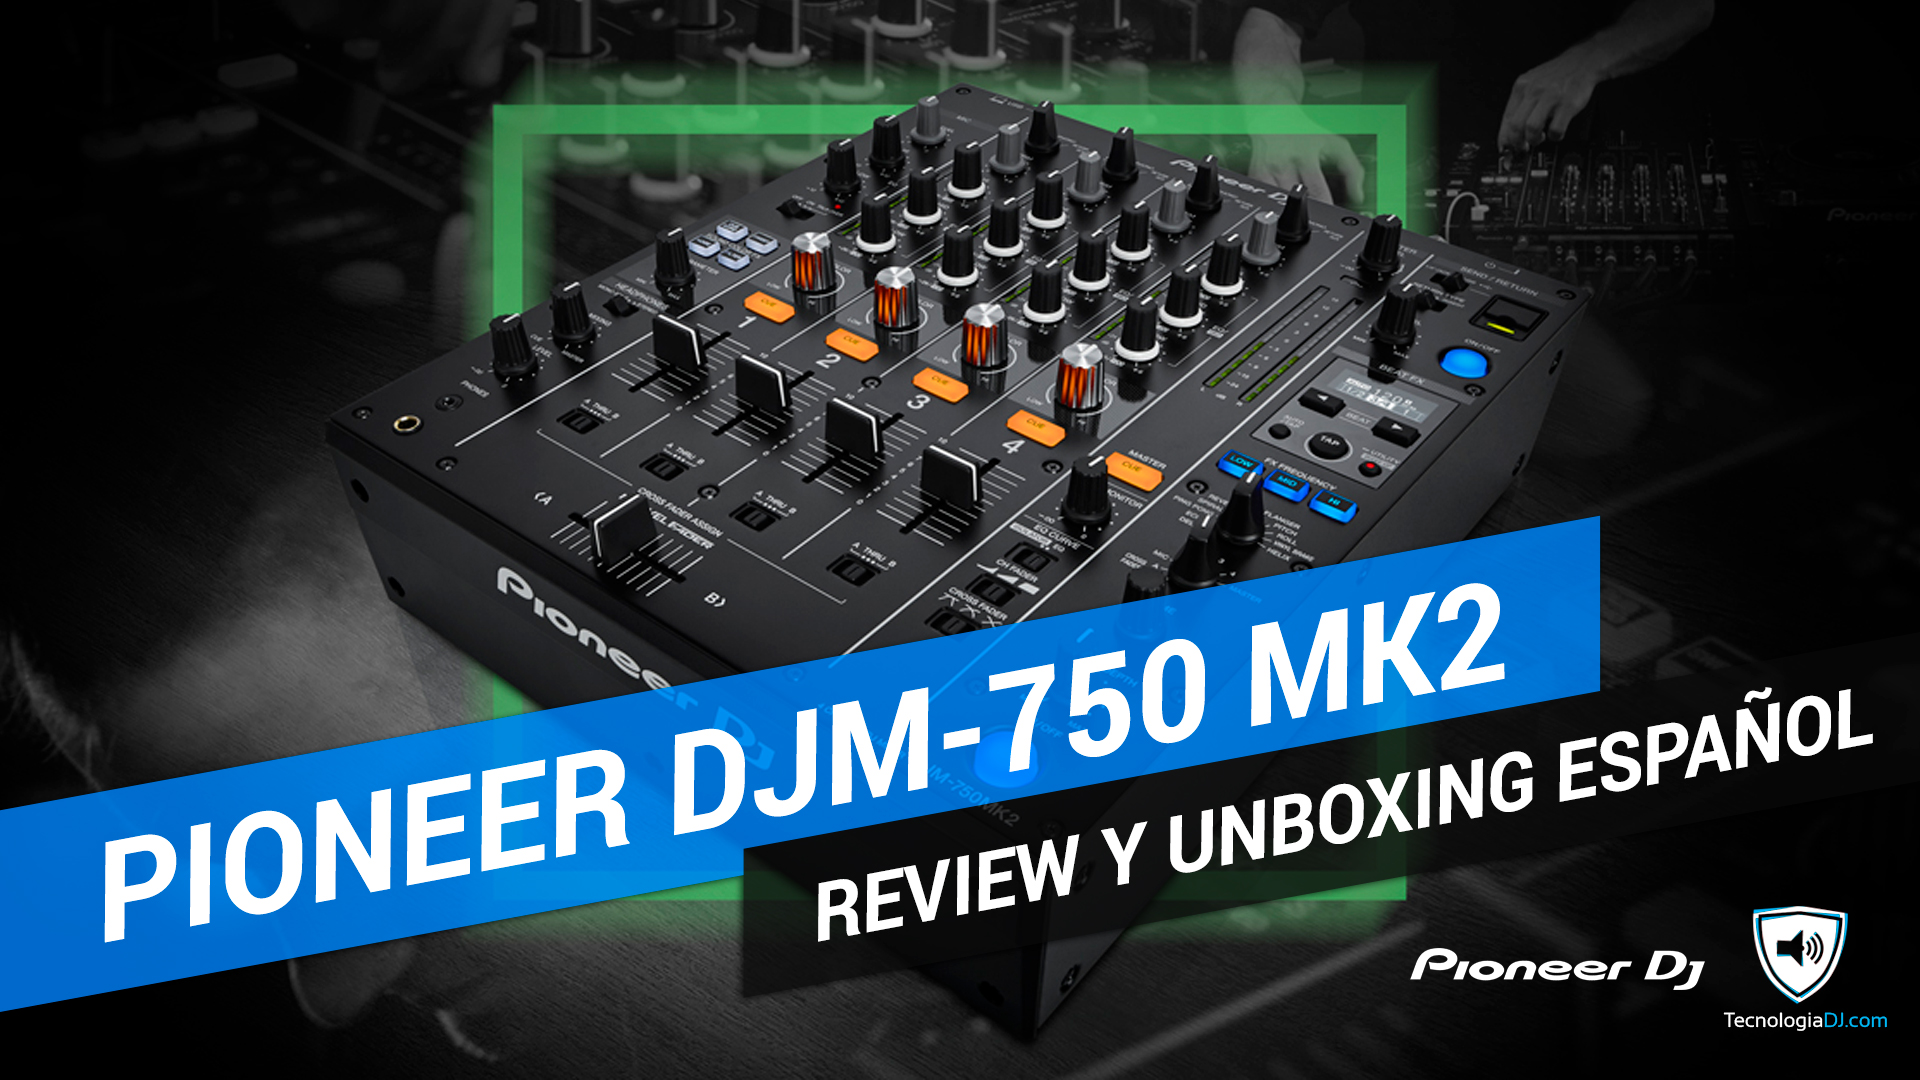 Review y unboxing mixer Pioneer DJM-750 MK2